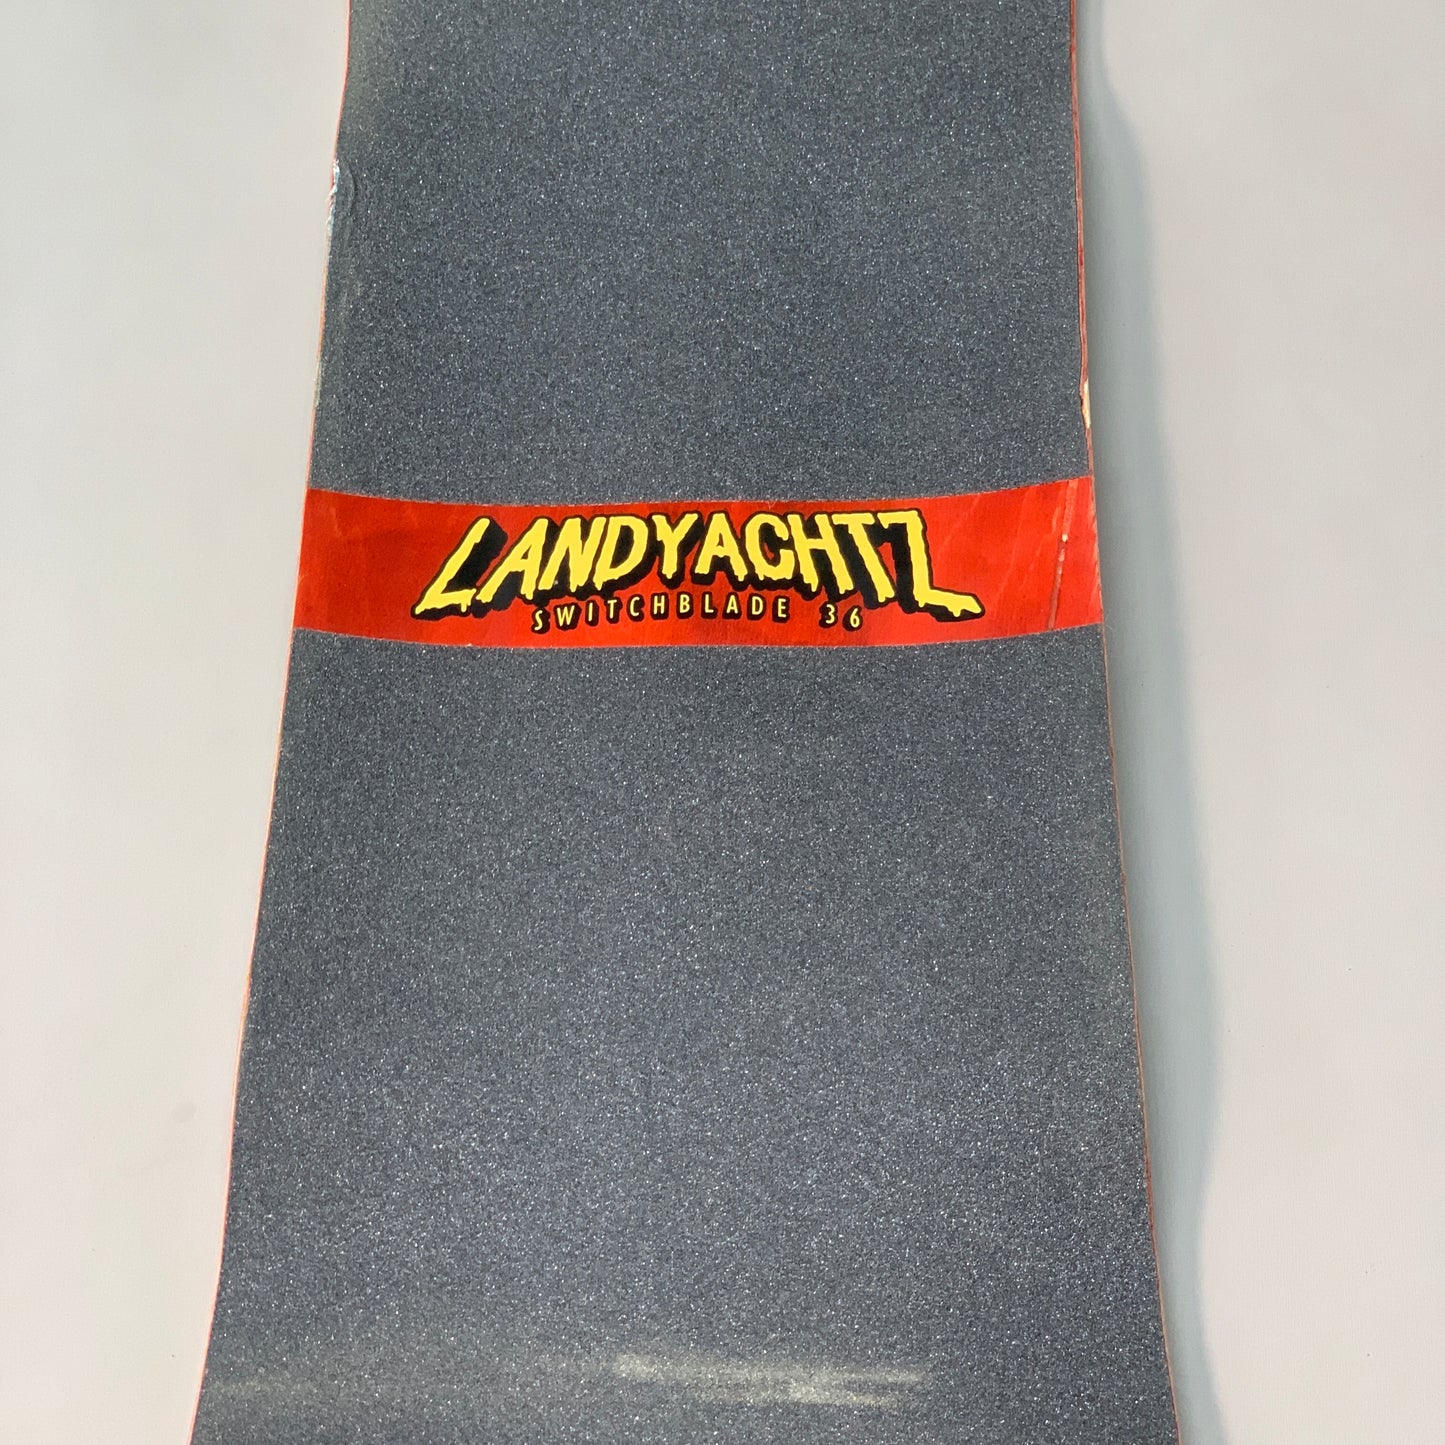 LANDYACHTZ Switchblade 36 Tropic Pink/Purple/Blue Longboard Deck 36"x9.5" (New Other)